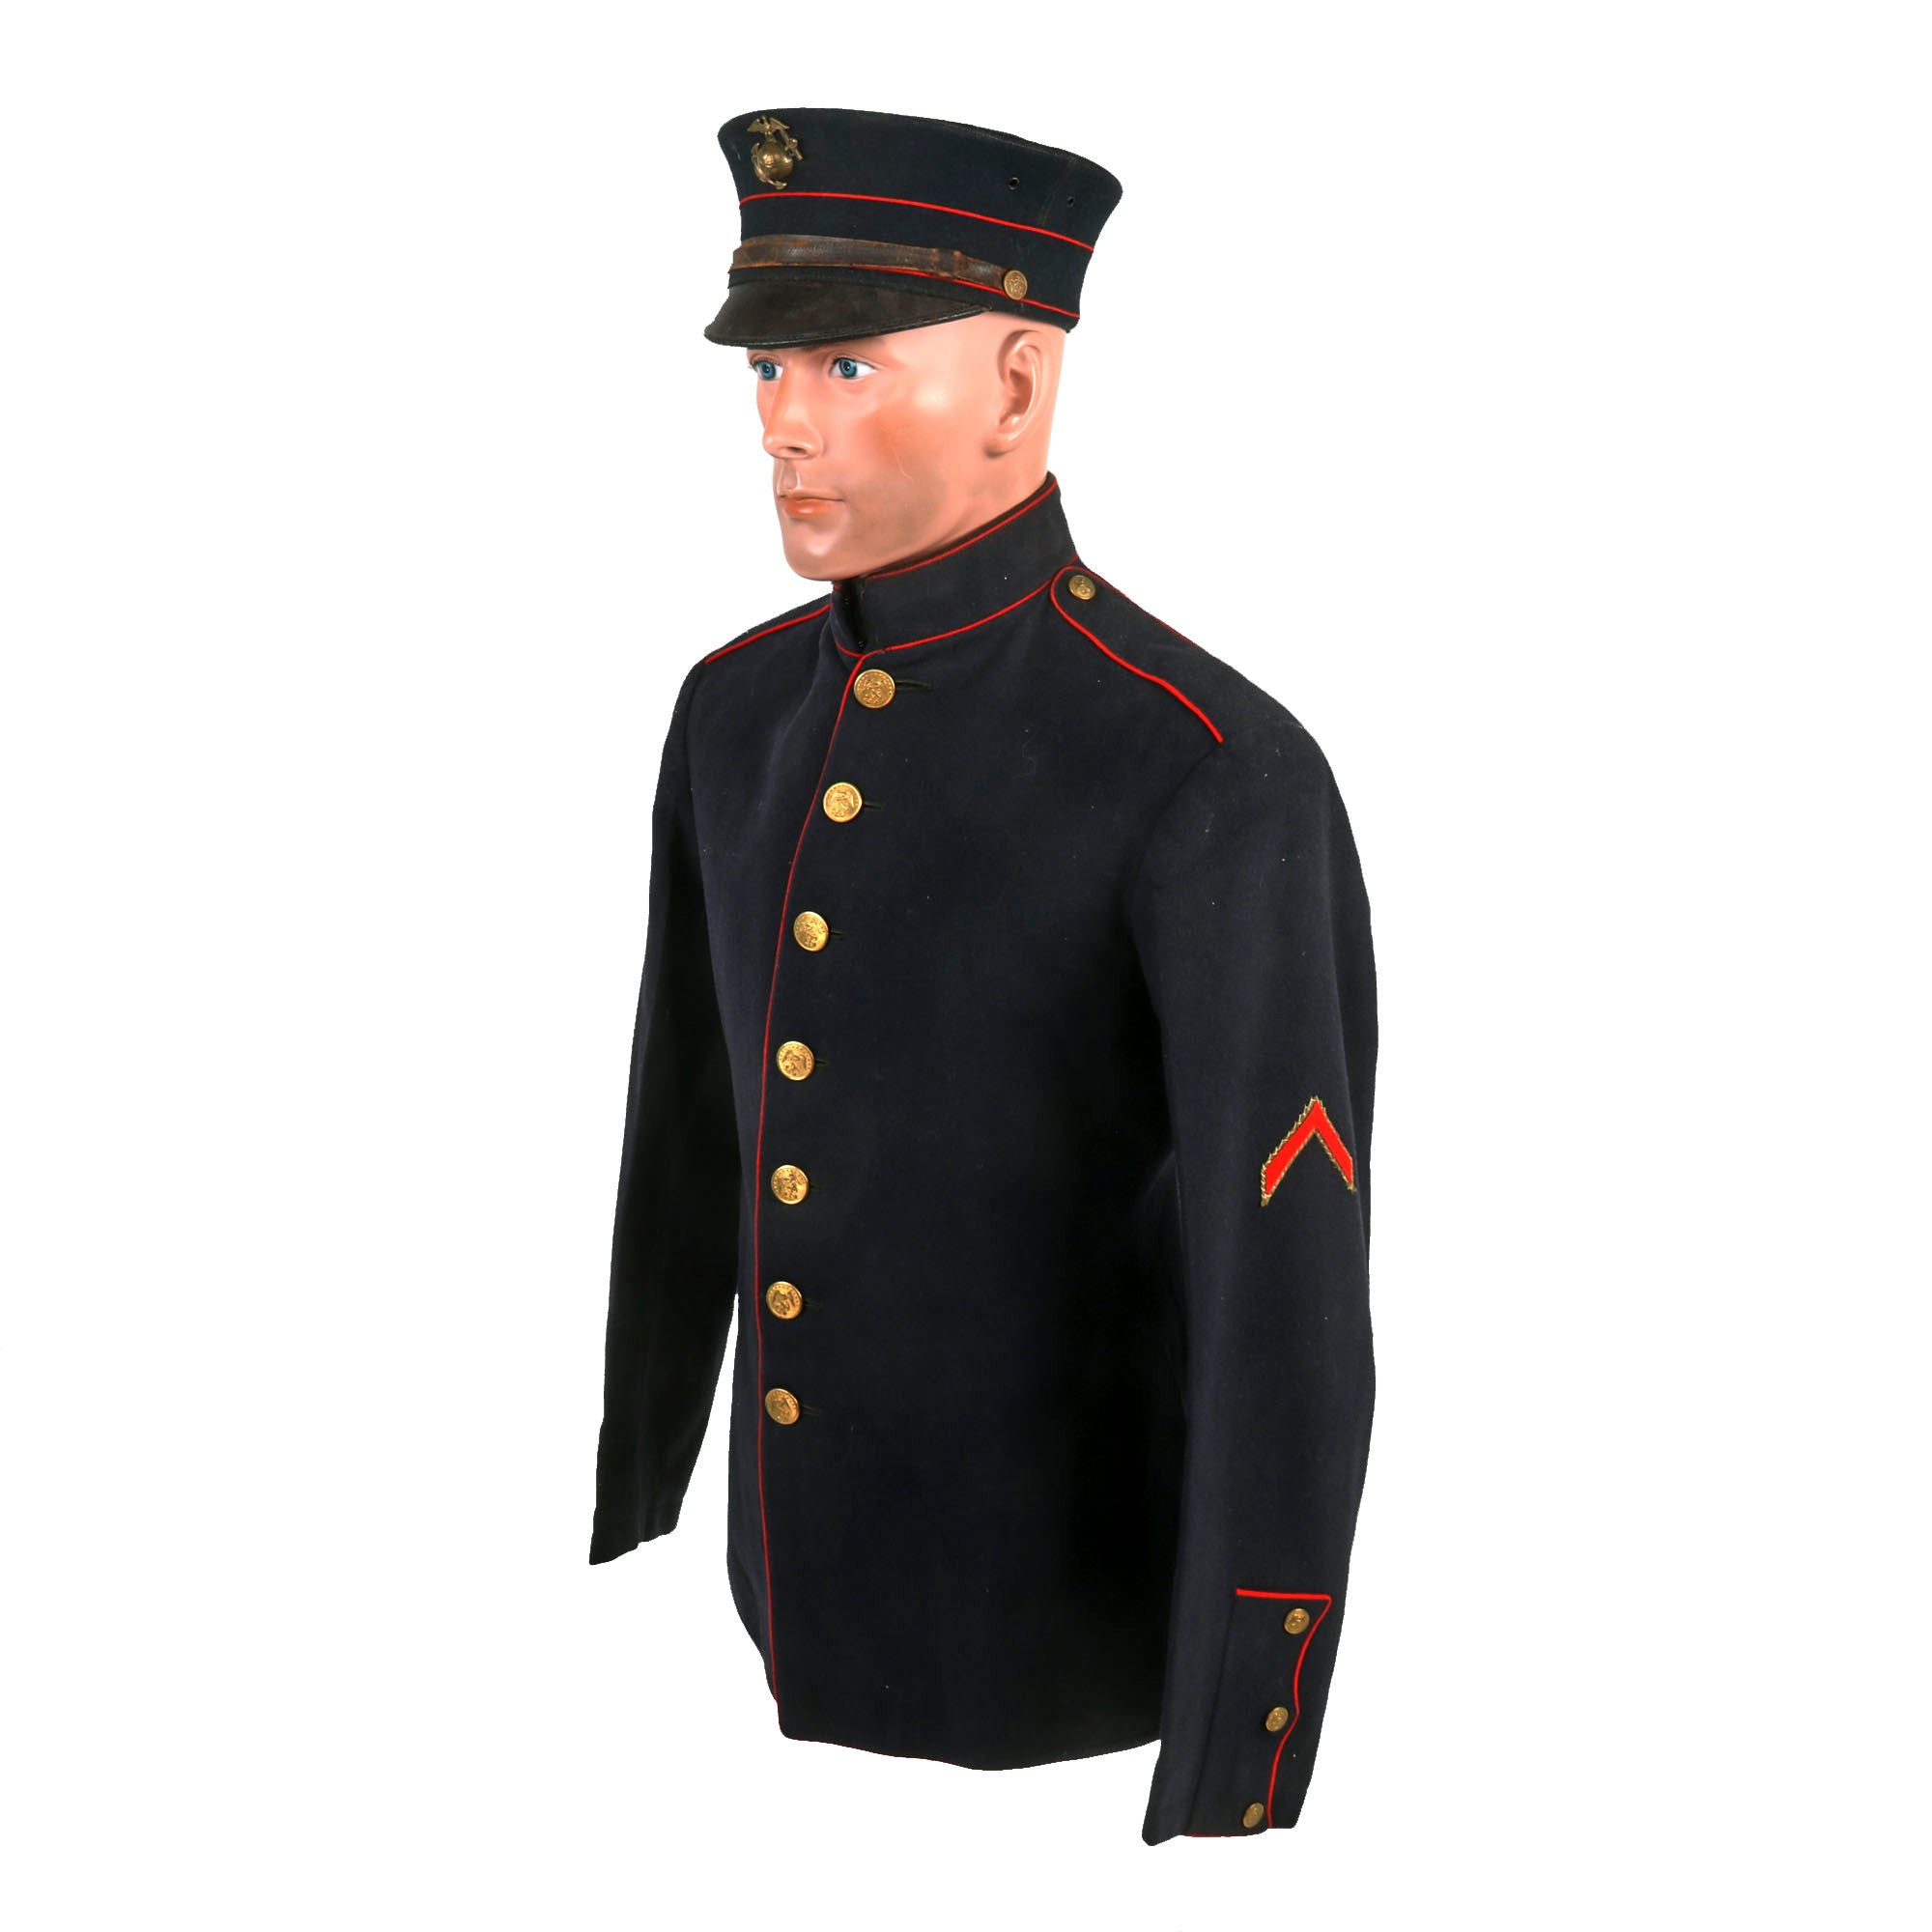 army dress blues uniform